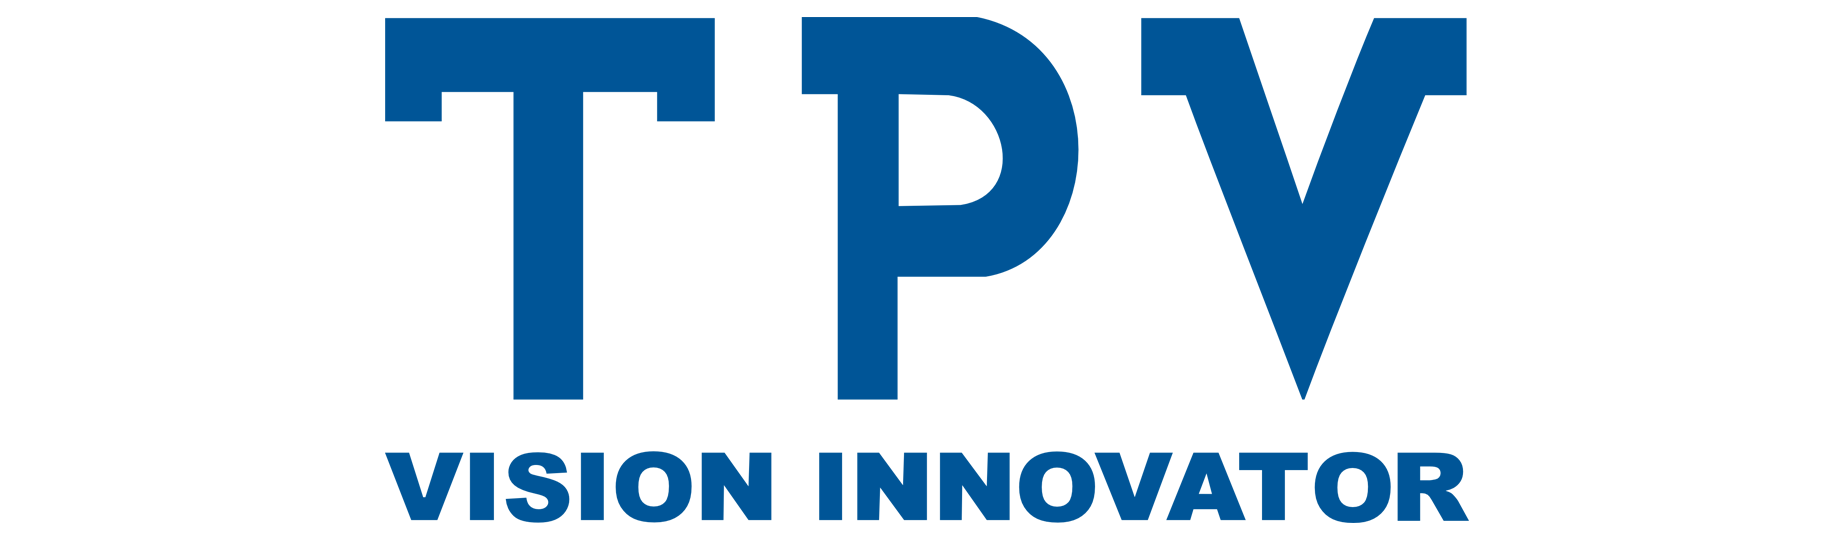 Ай си эс сайт. TPV логотип. TPV CIS Санкт-Петербург. Завод TPV В Санкт-Петербурге. CIS логотип.